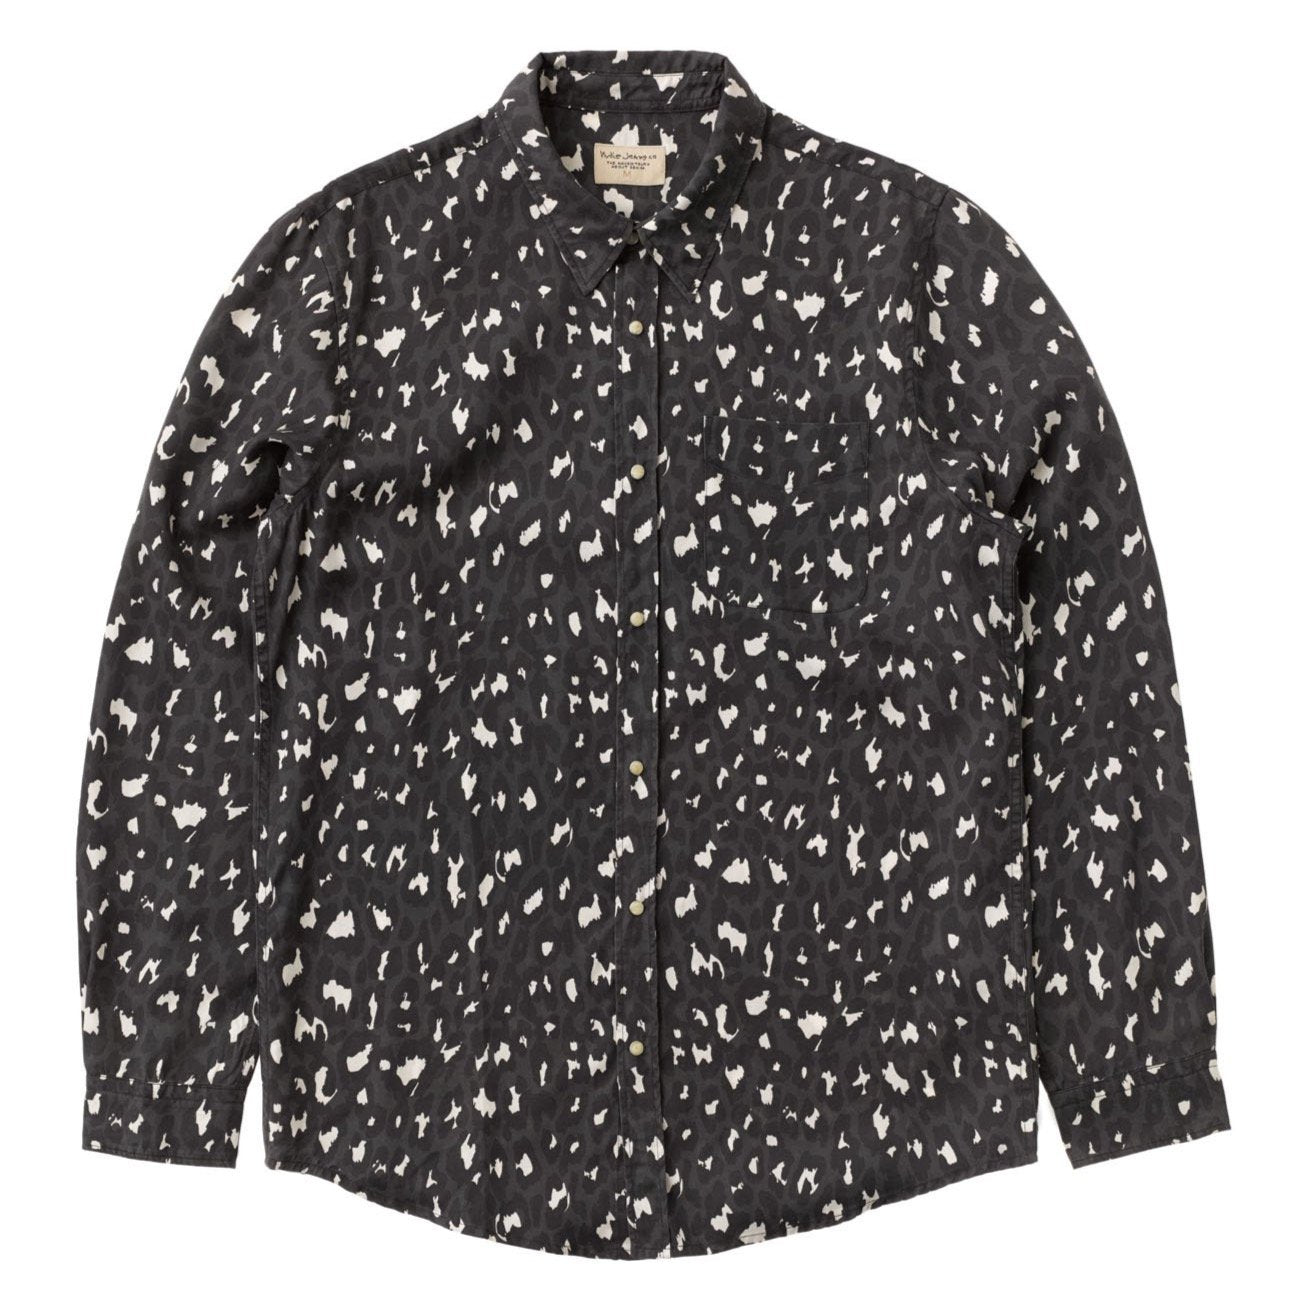 Nudie Jeans Co. Chuck Black Leopard Shirt